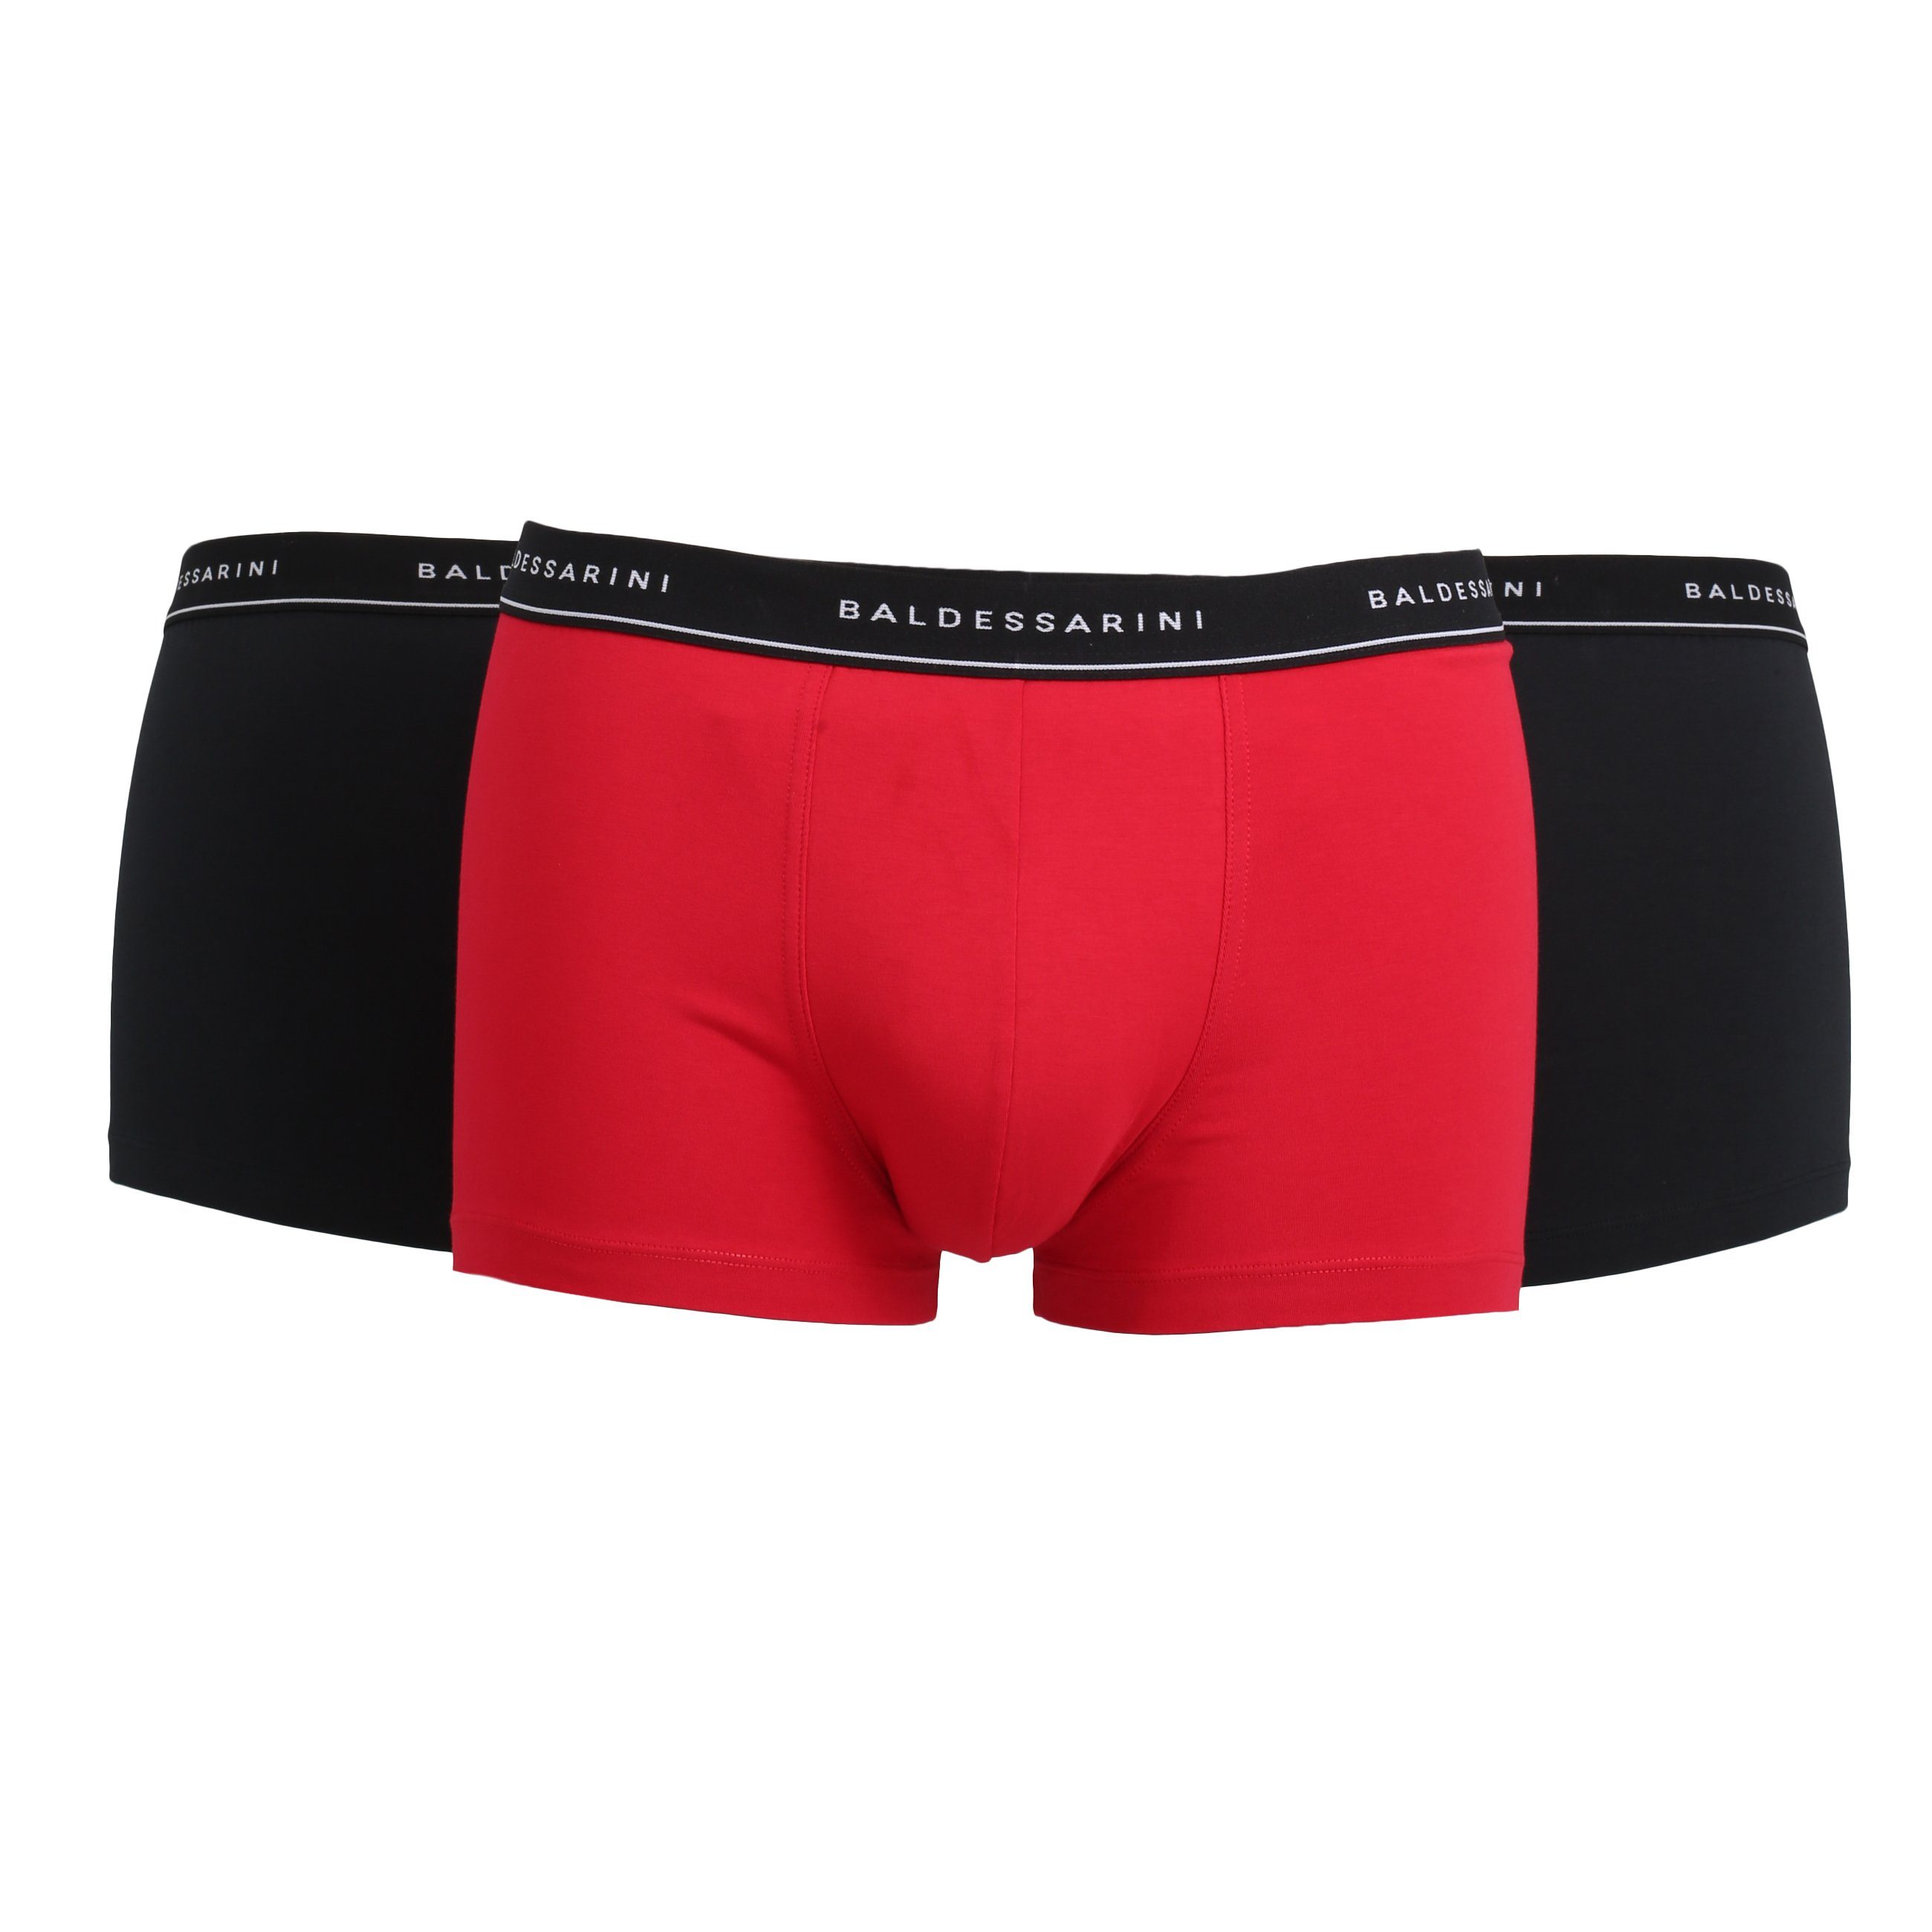 BALDESSARINI Boxer Herren Shorts 3er Pack Pants, Stretch Cotton Rot/Schwarz 